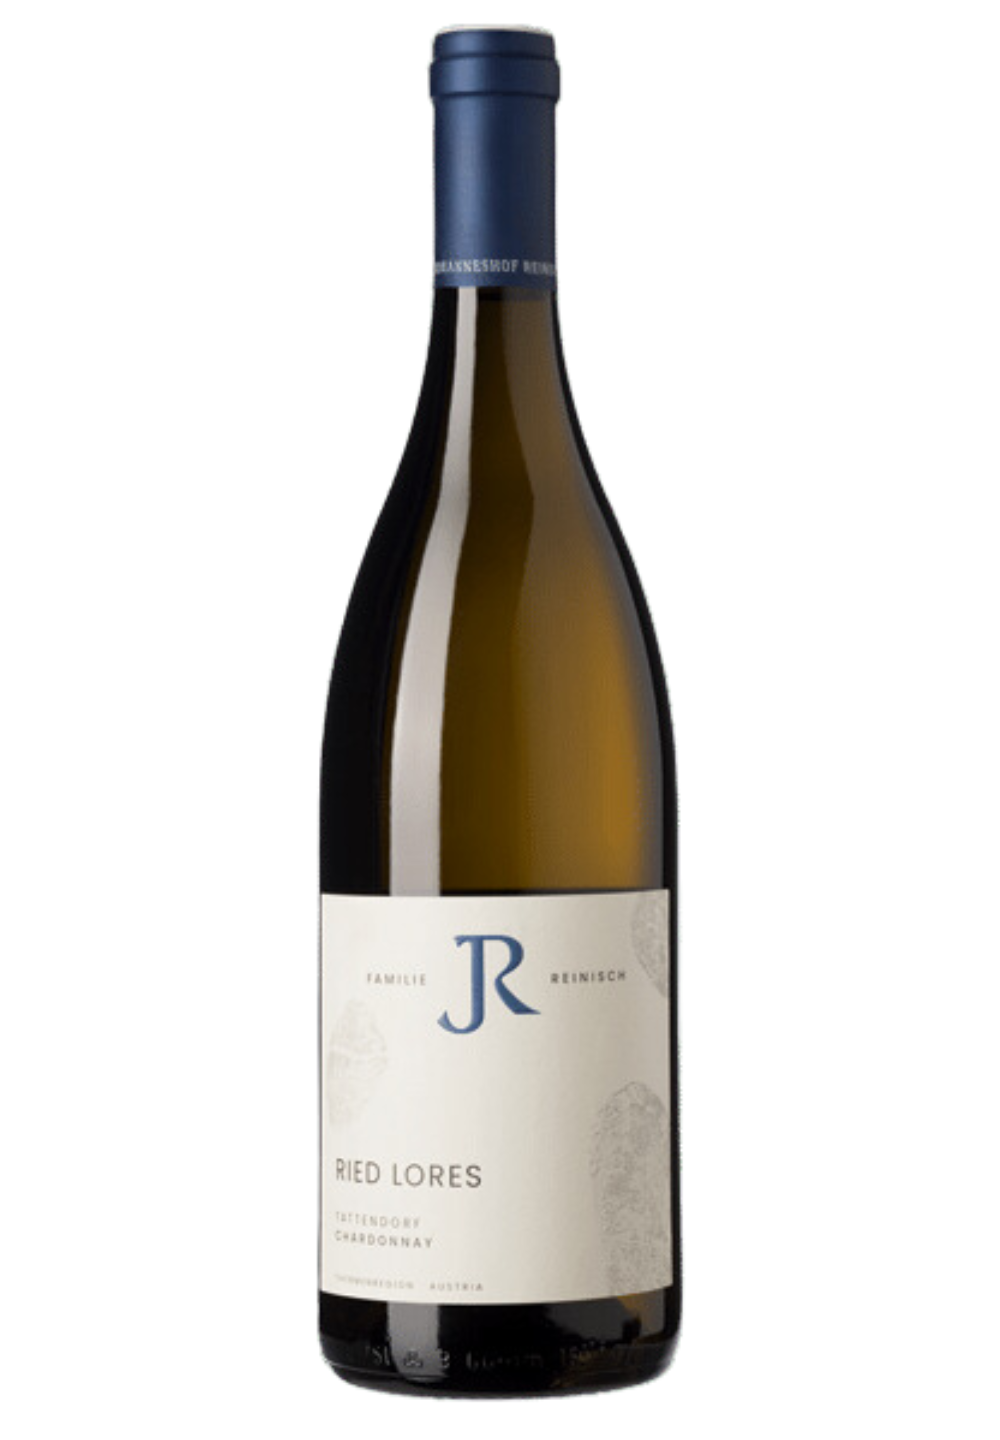 2021 Chardonnay Ried Lores - Johanneshof-Reinisch